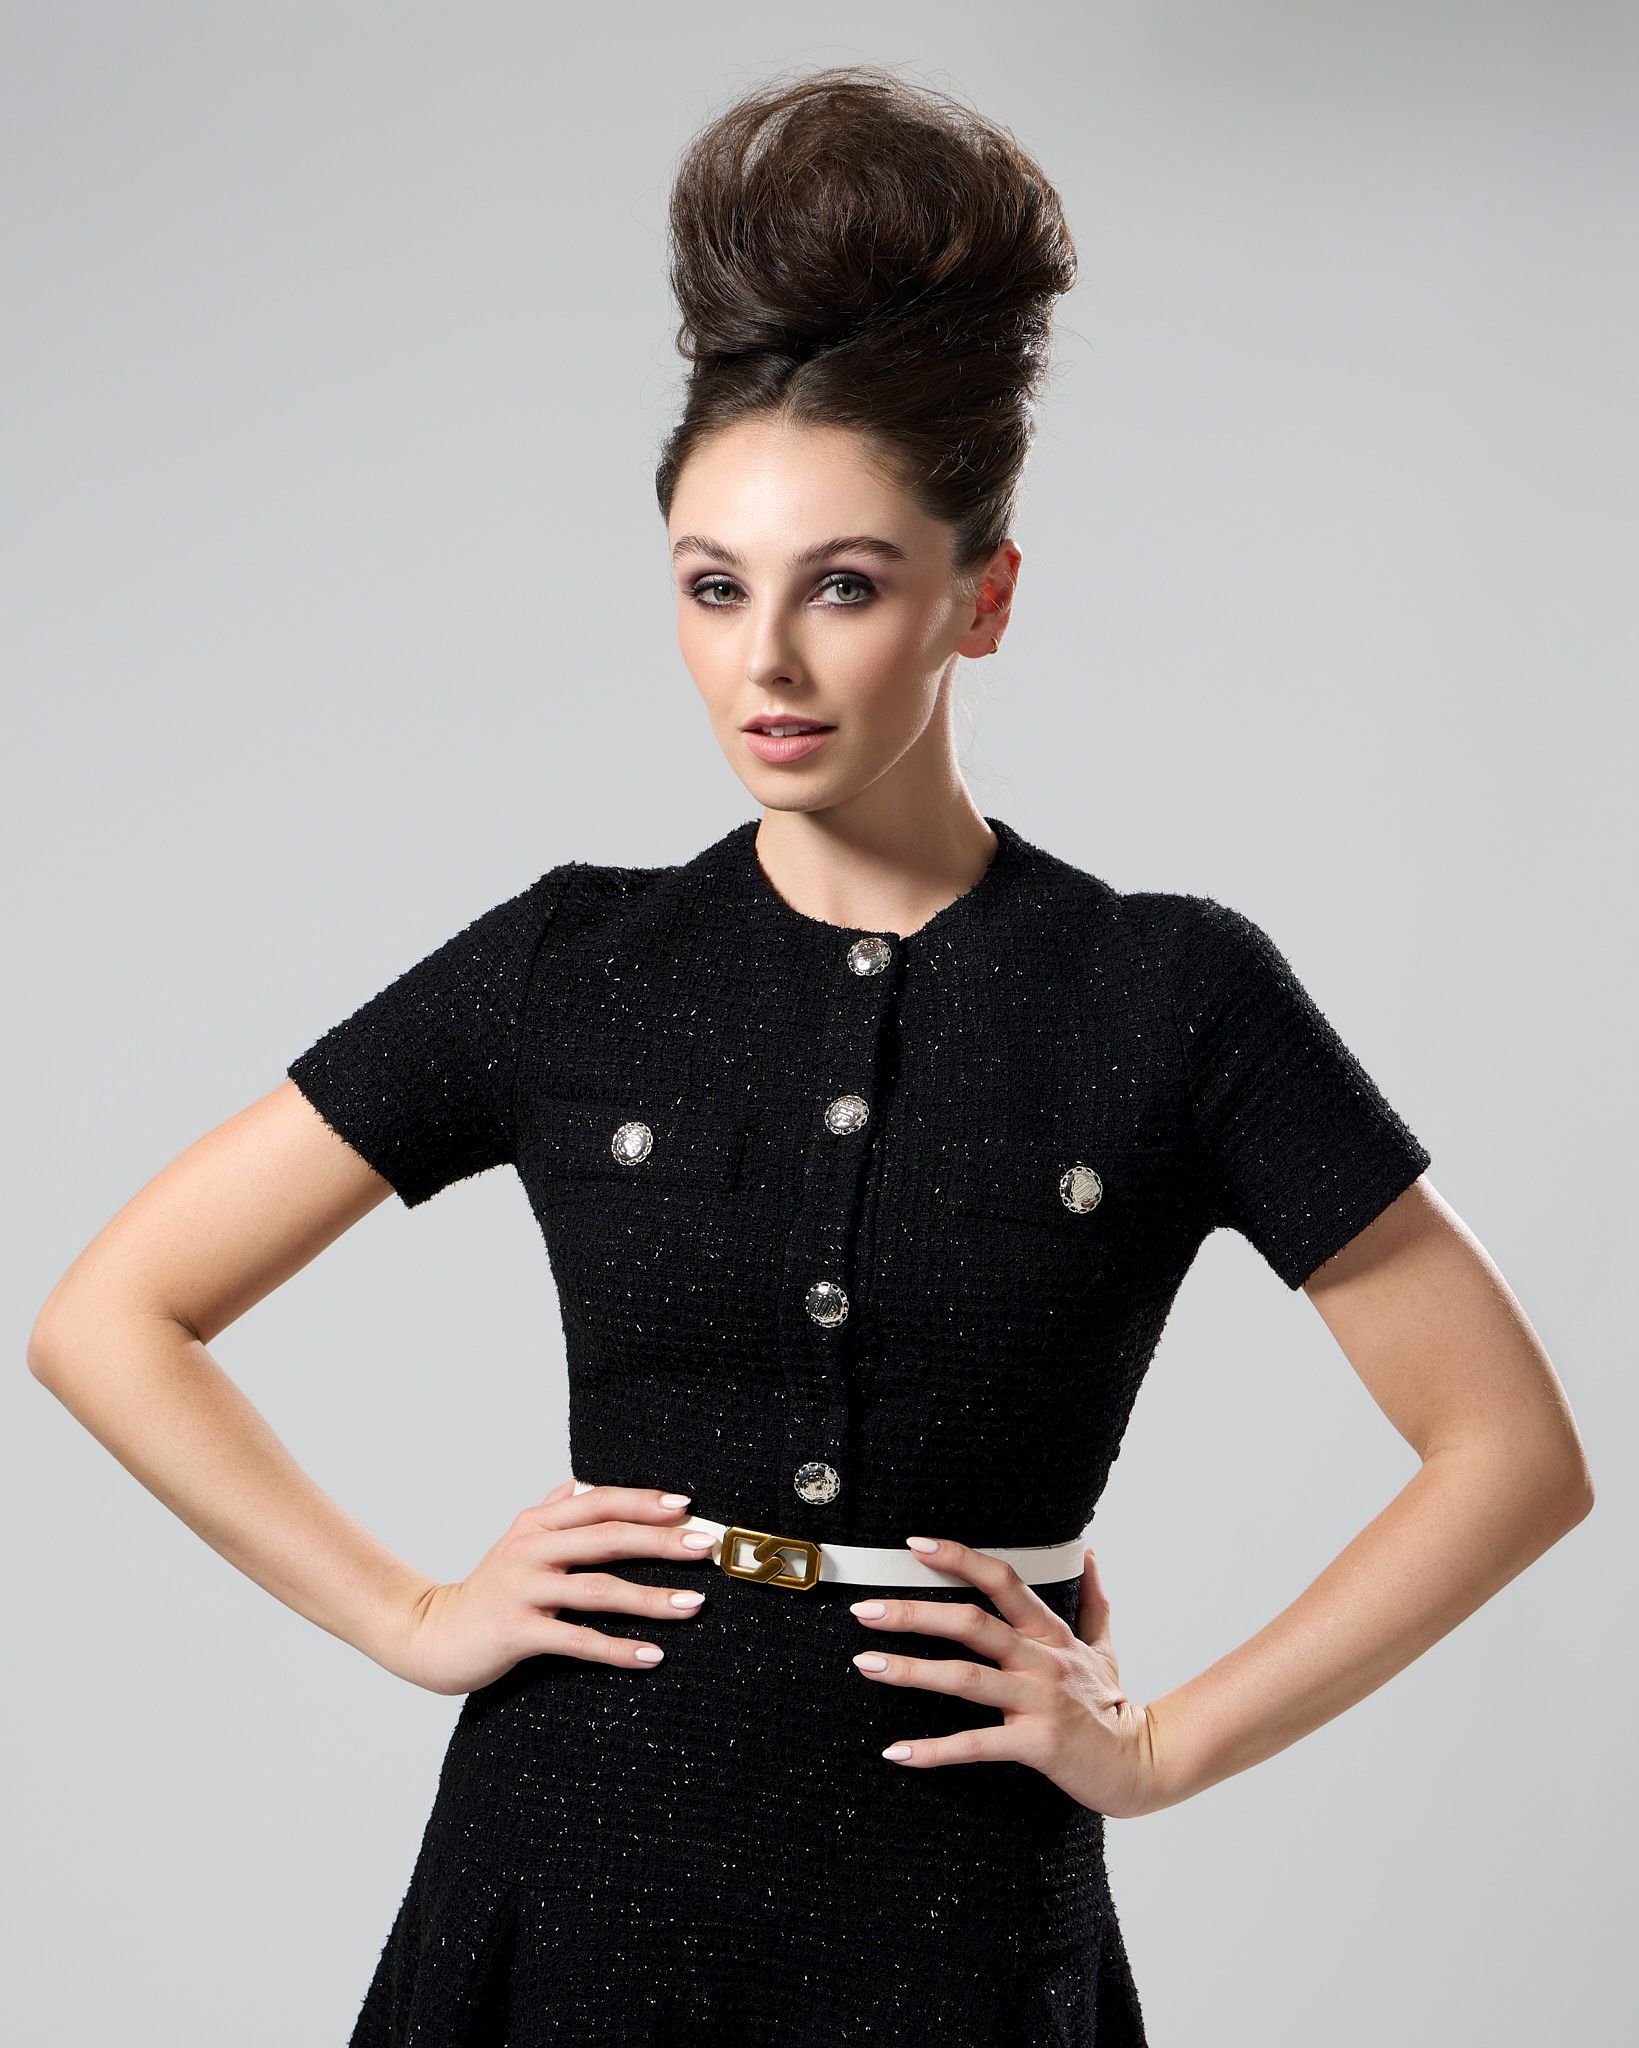 International top model wearing a elegant black dress for NY Fashion week.